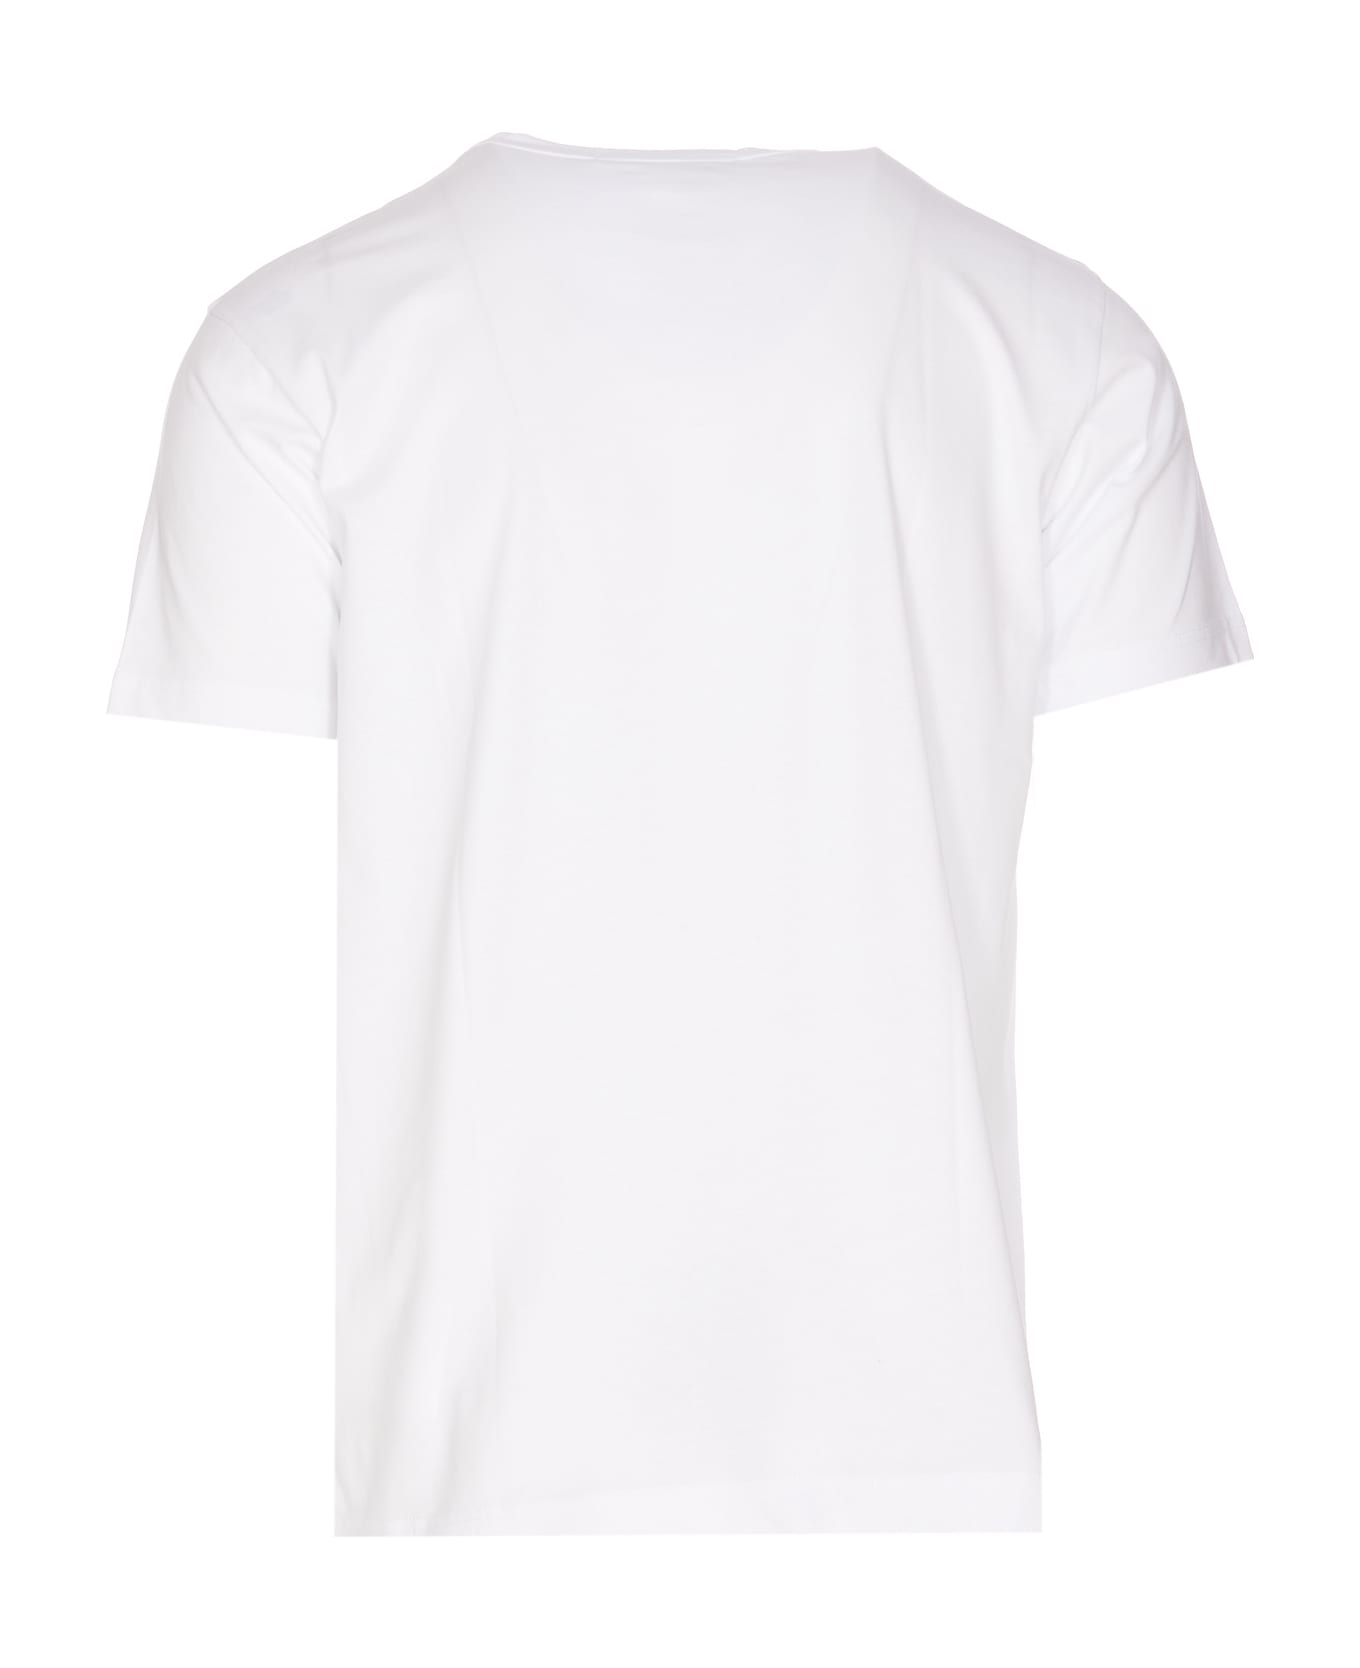 Comme des Garçons Andy Warhol Print T-shirt - White シャツ